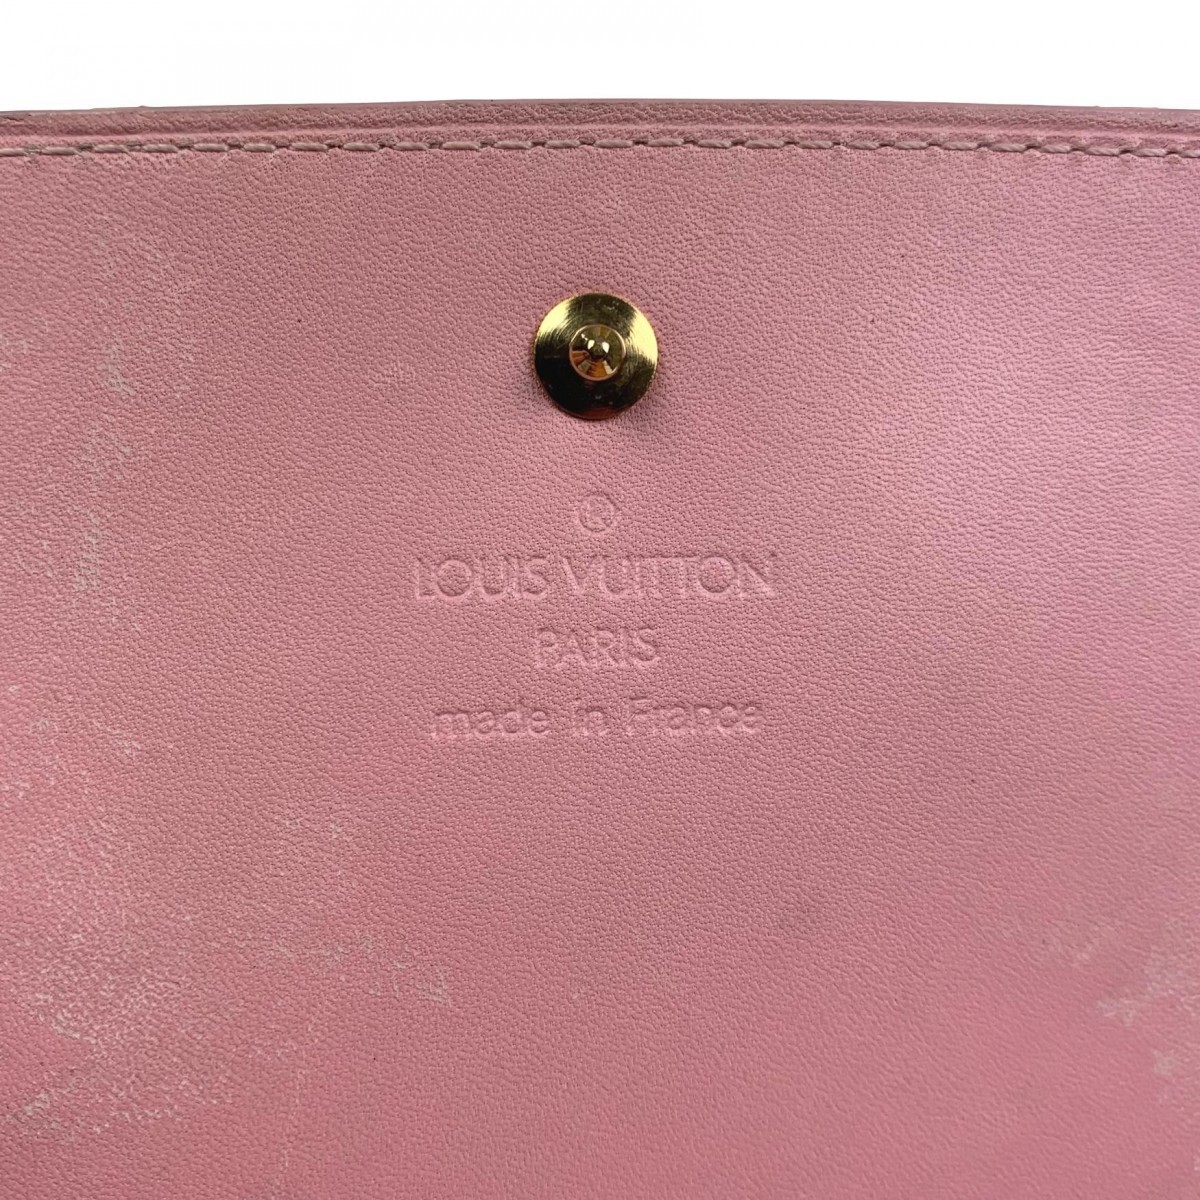 Louis Vuitton Vernis Wallet Walker